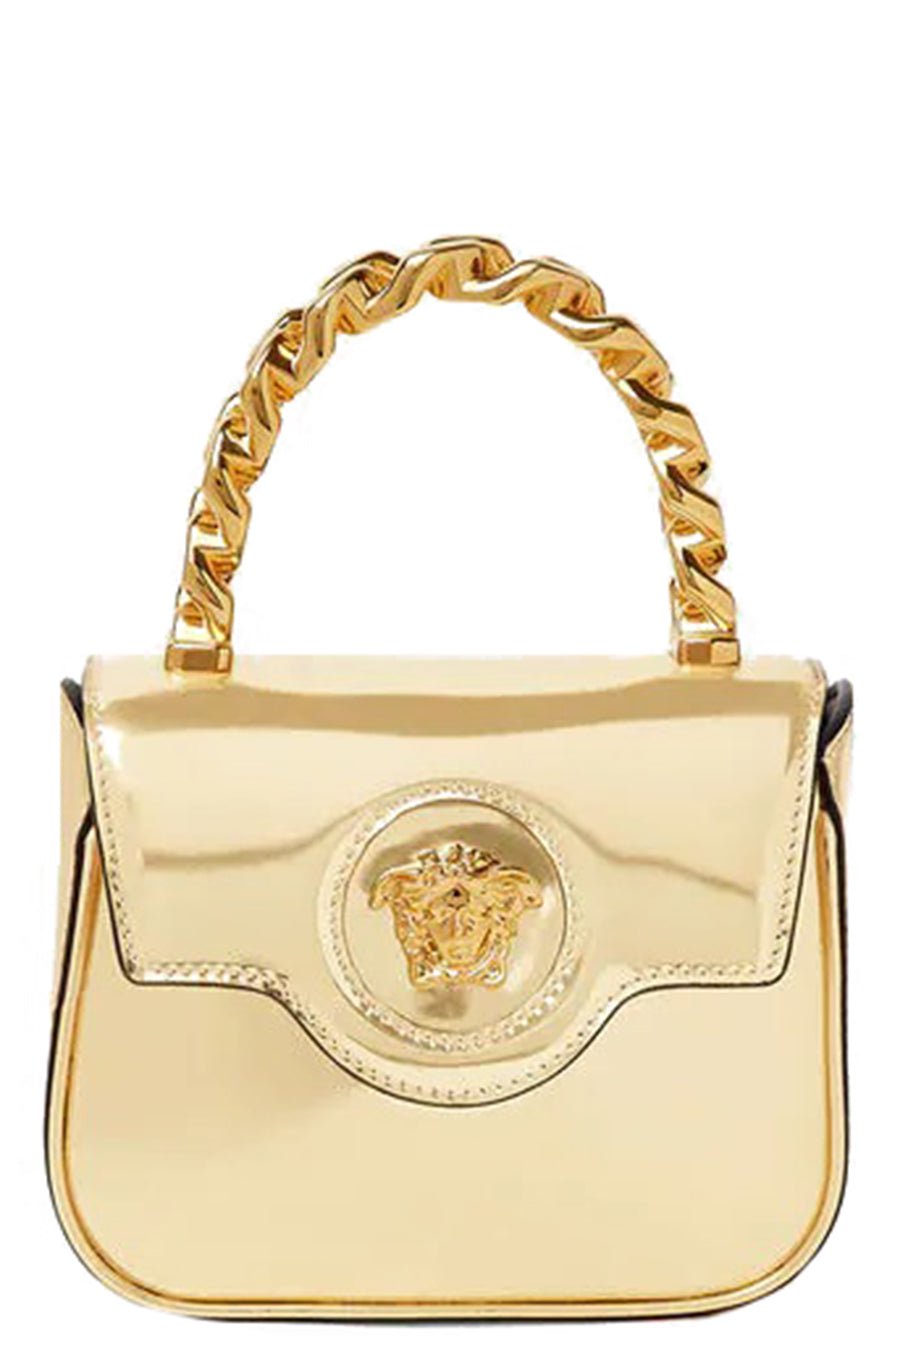 Versace La Medusa Mini Leather Shoulder Bag in Yellow